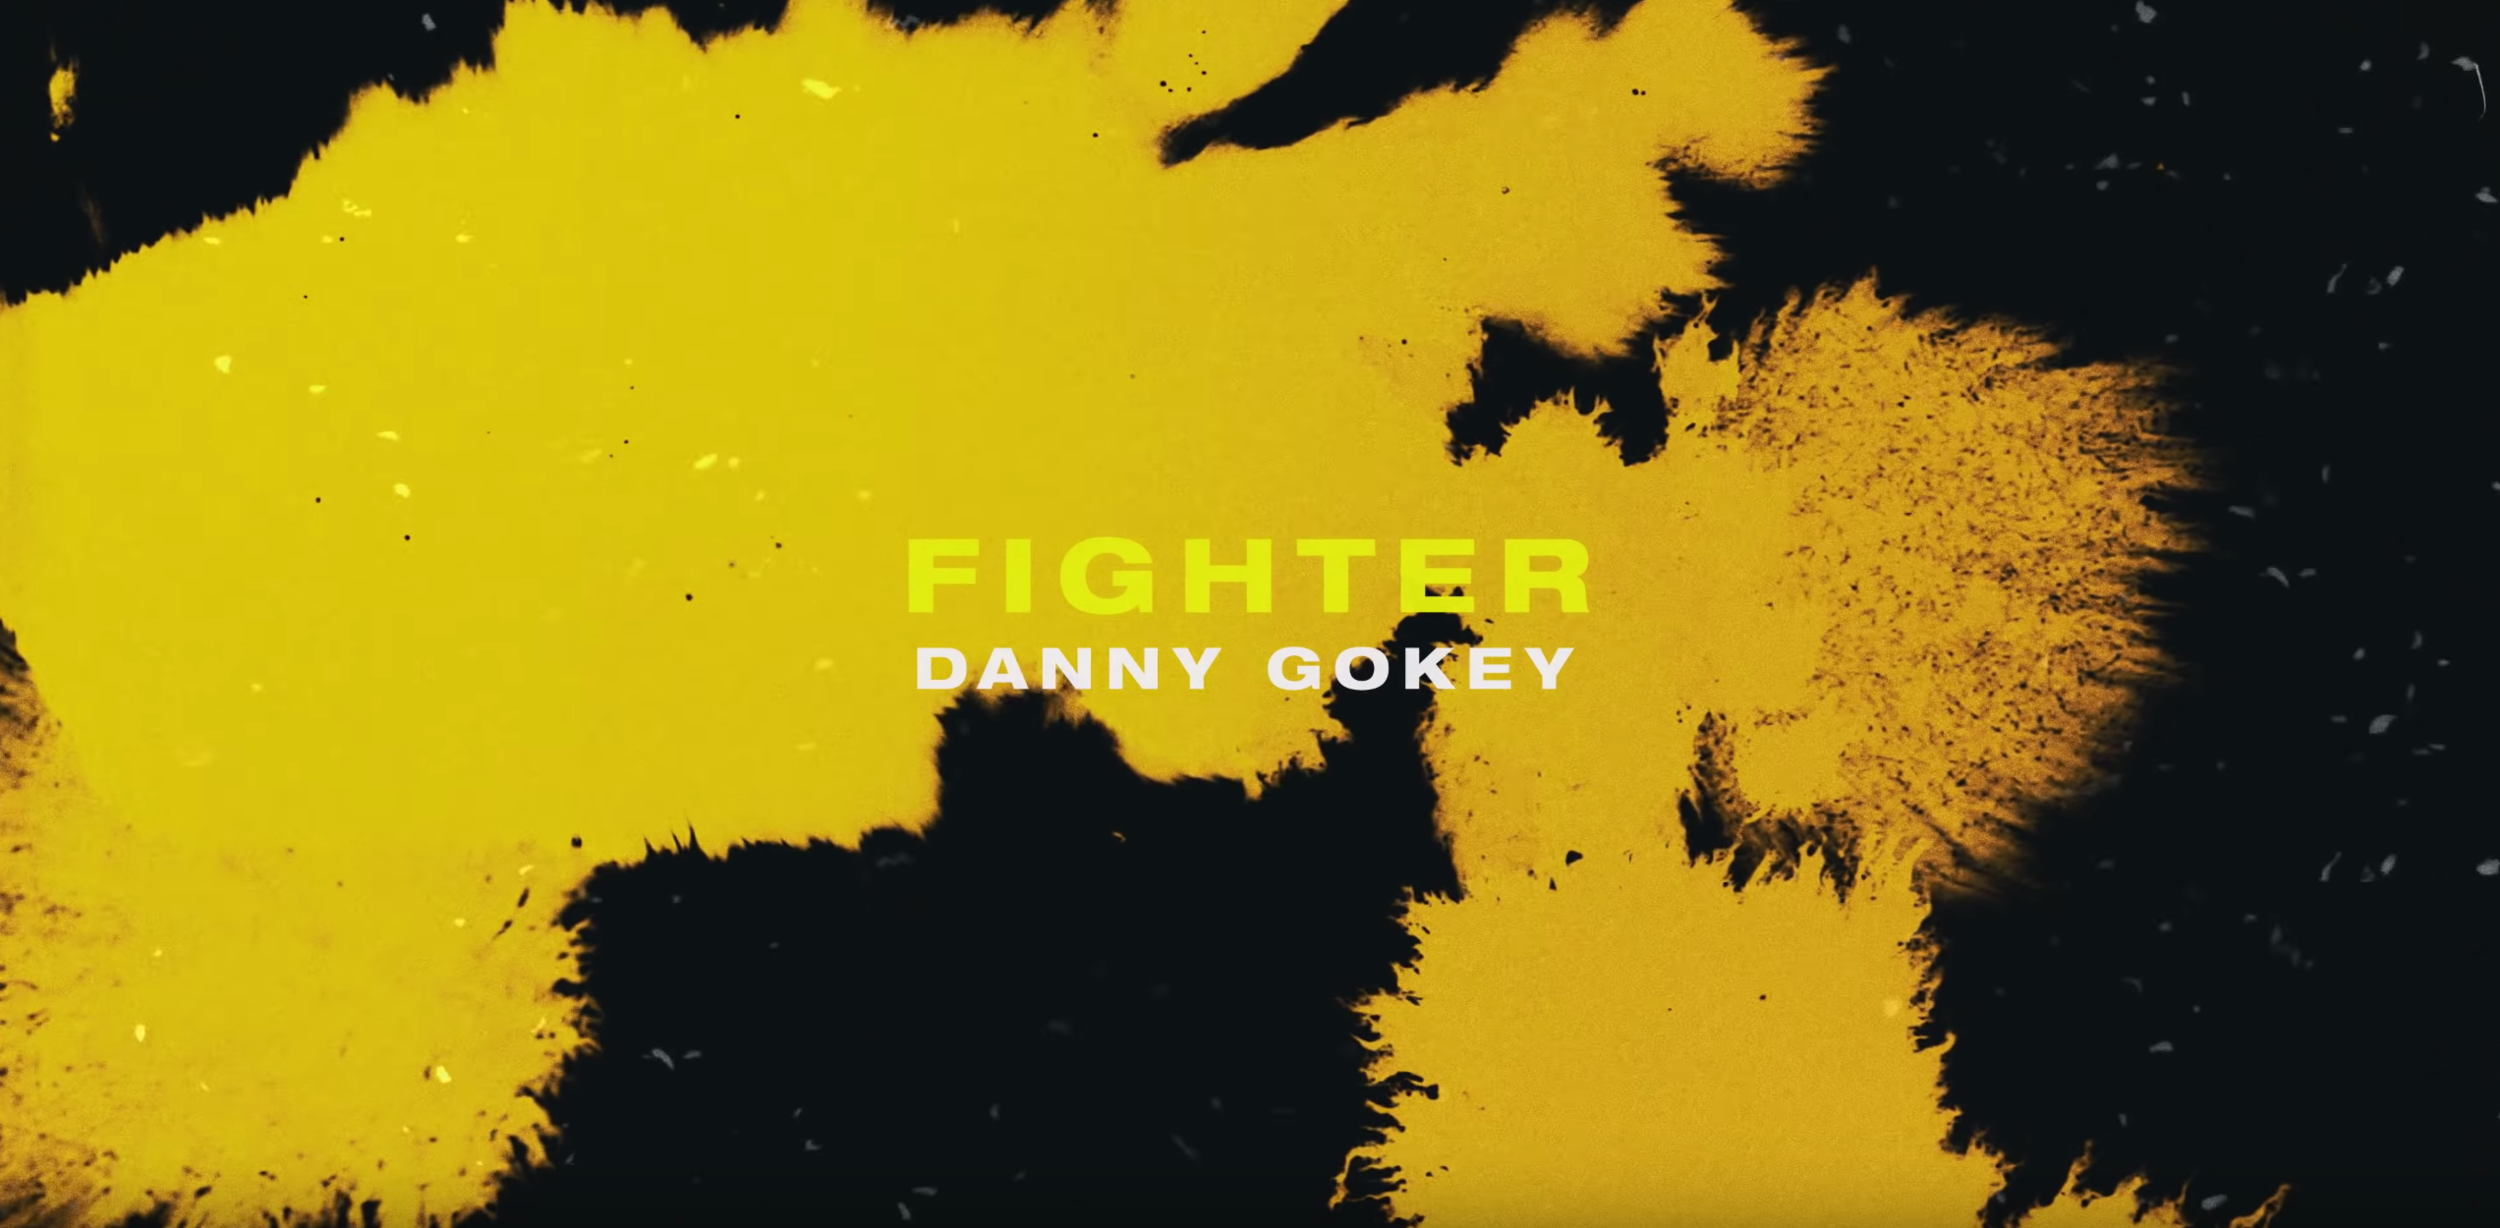 Danny Gokey // Fighter